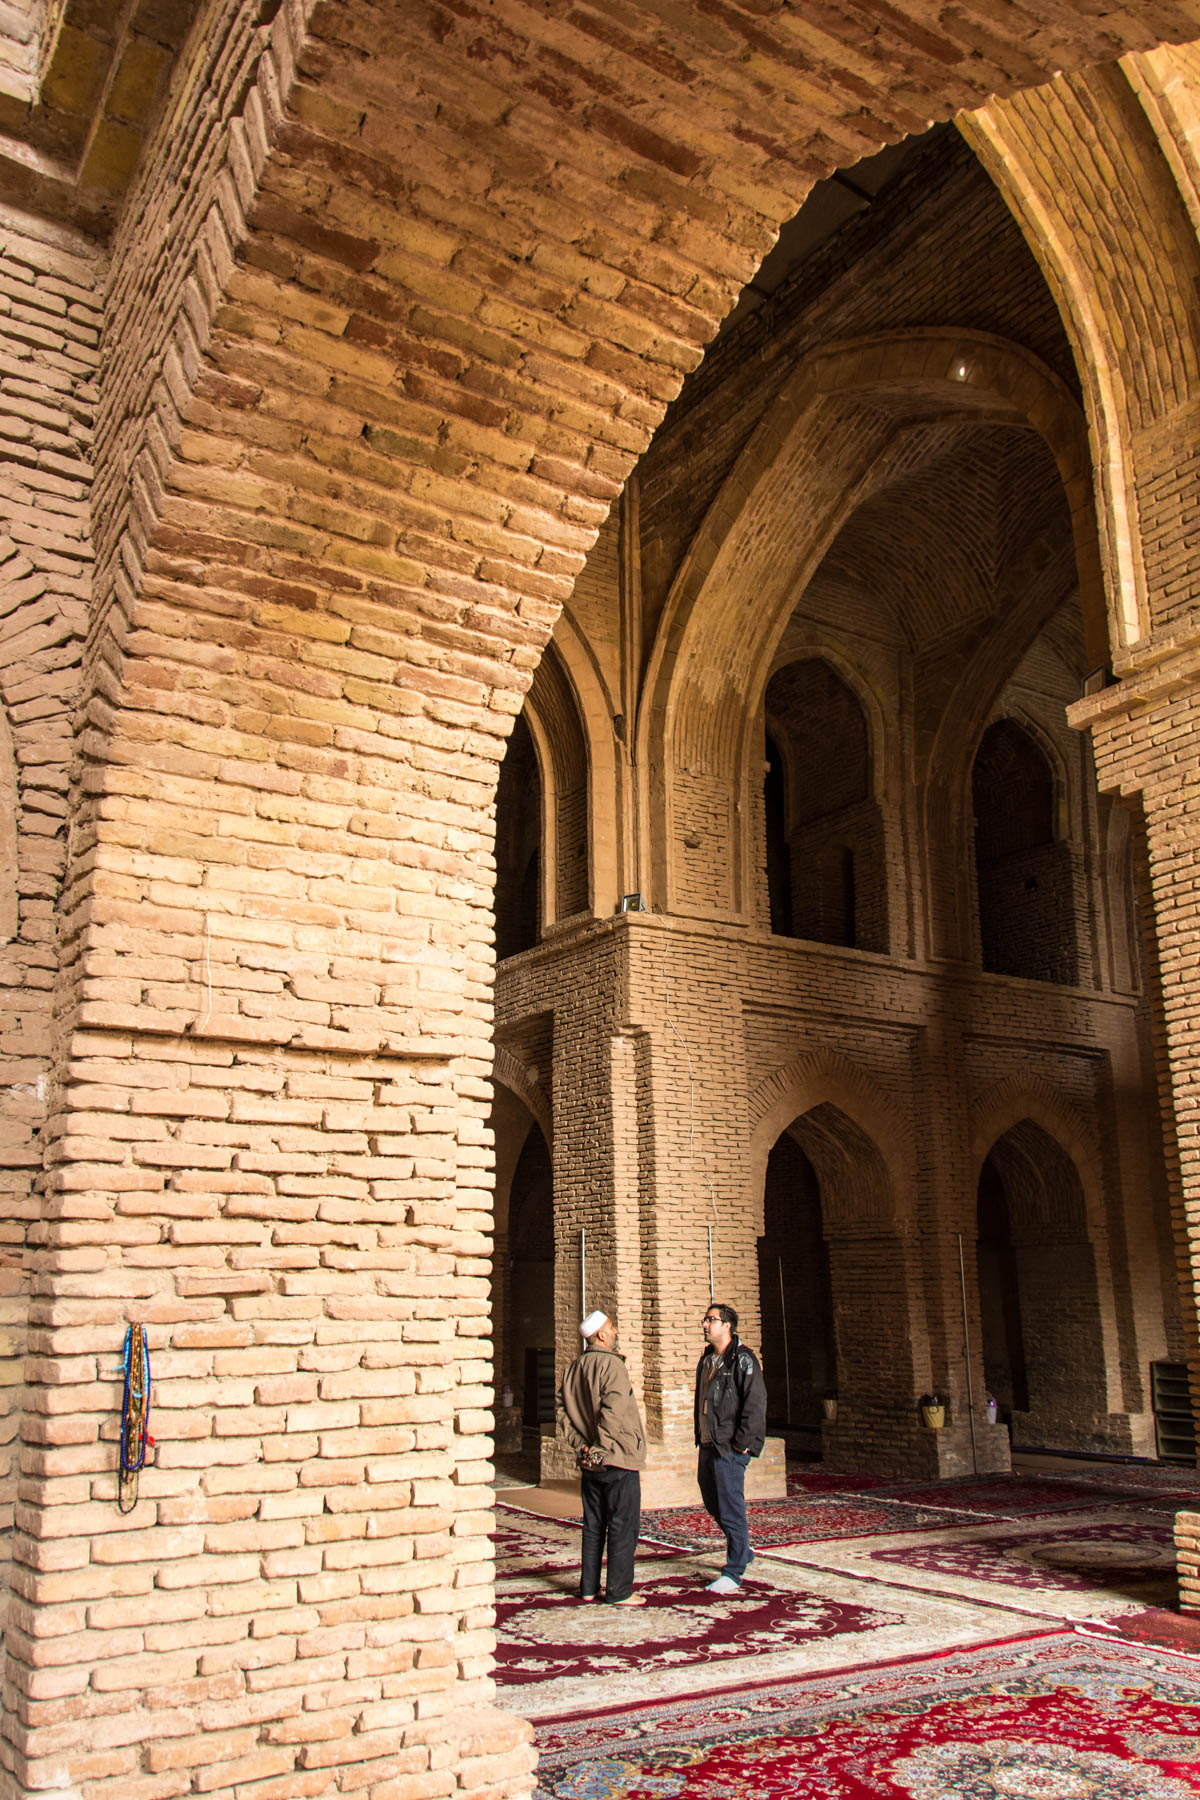 Visiting the Jami mausoleum in Torbat Jam, Iran.